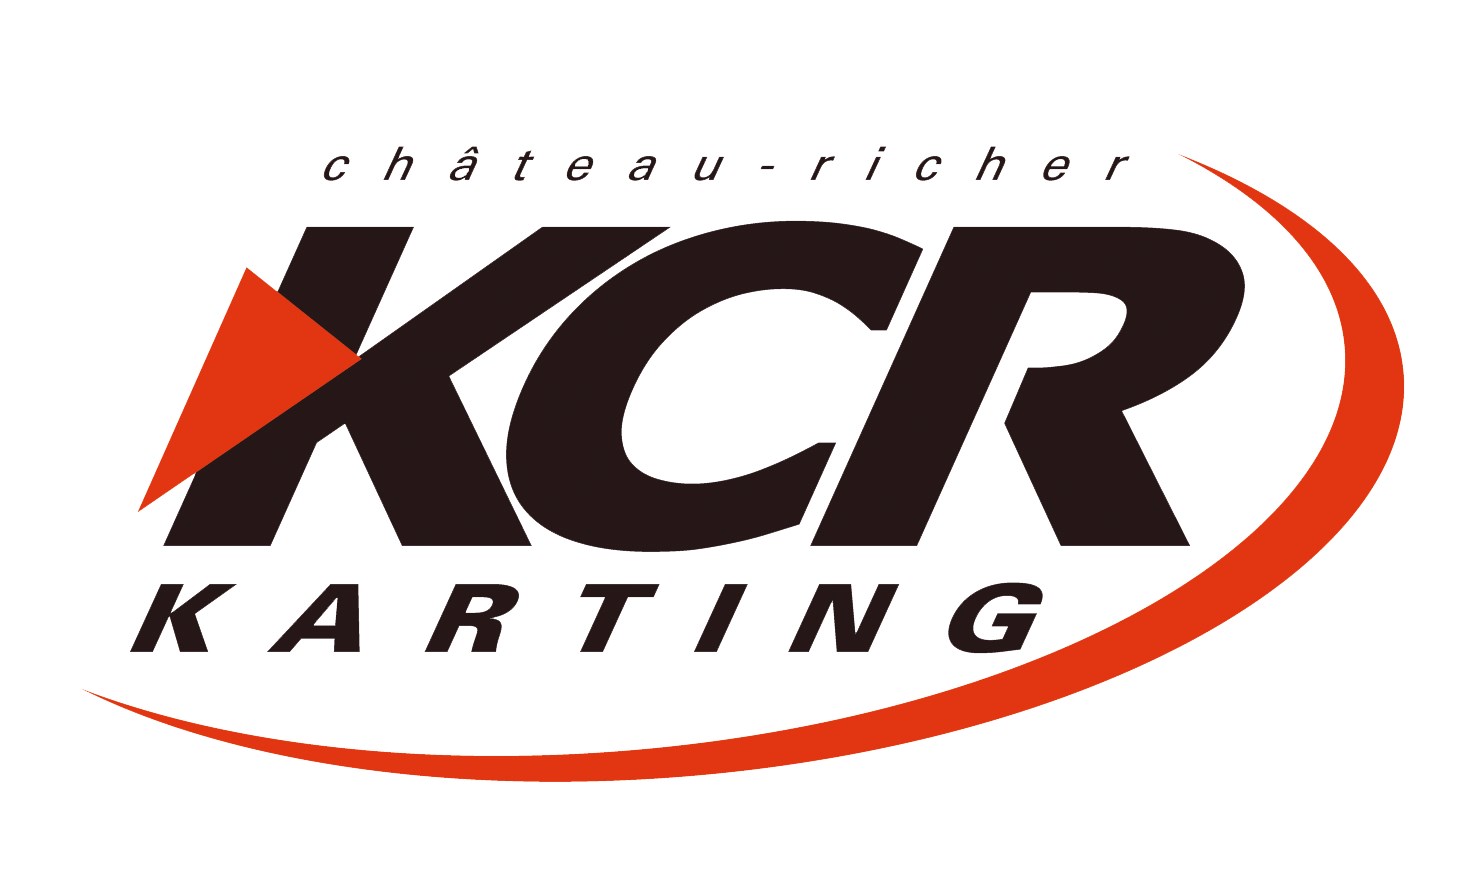 KCR - Karting 